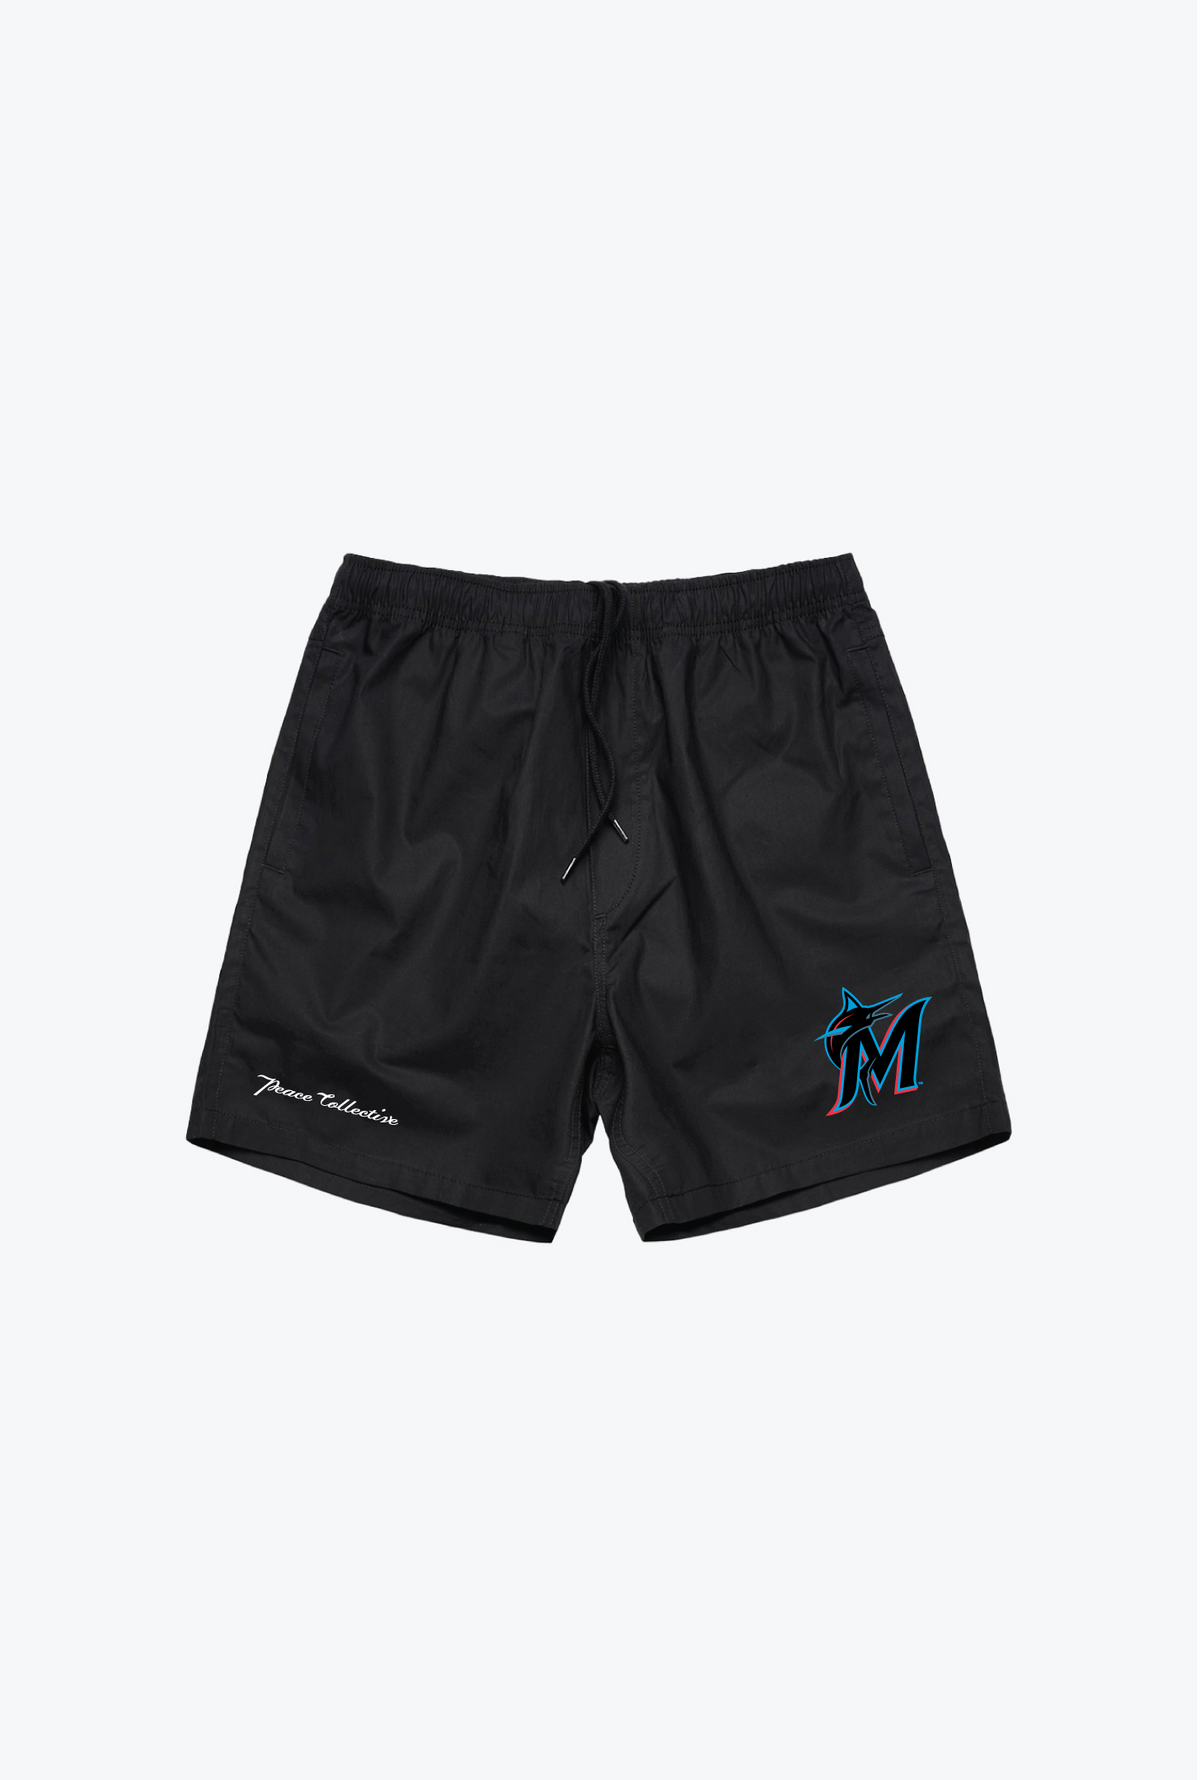 Miami Marlins Board Shorts - Black